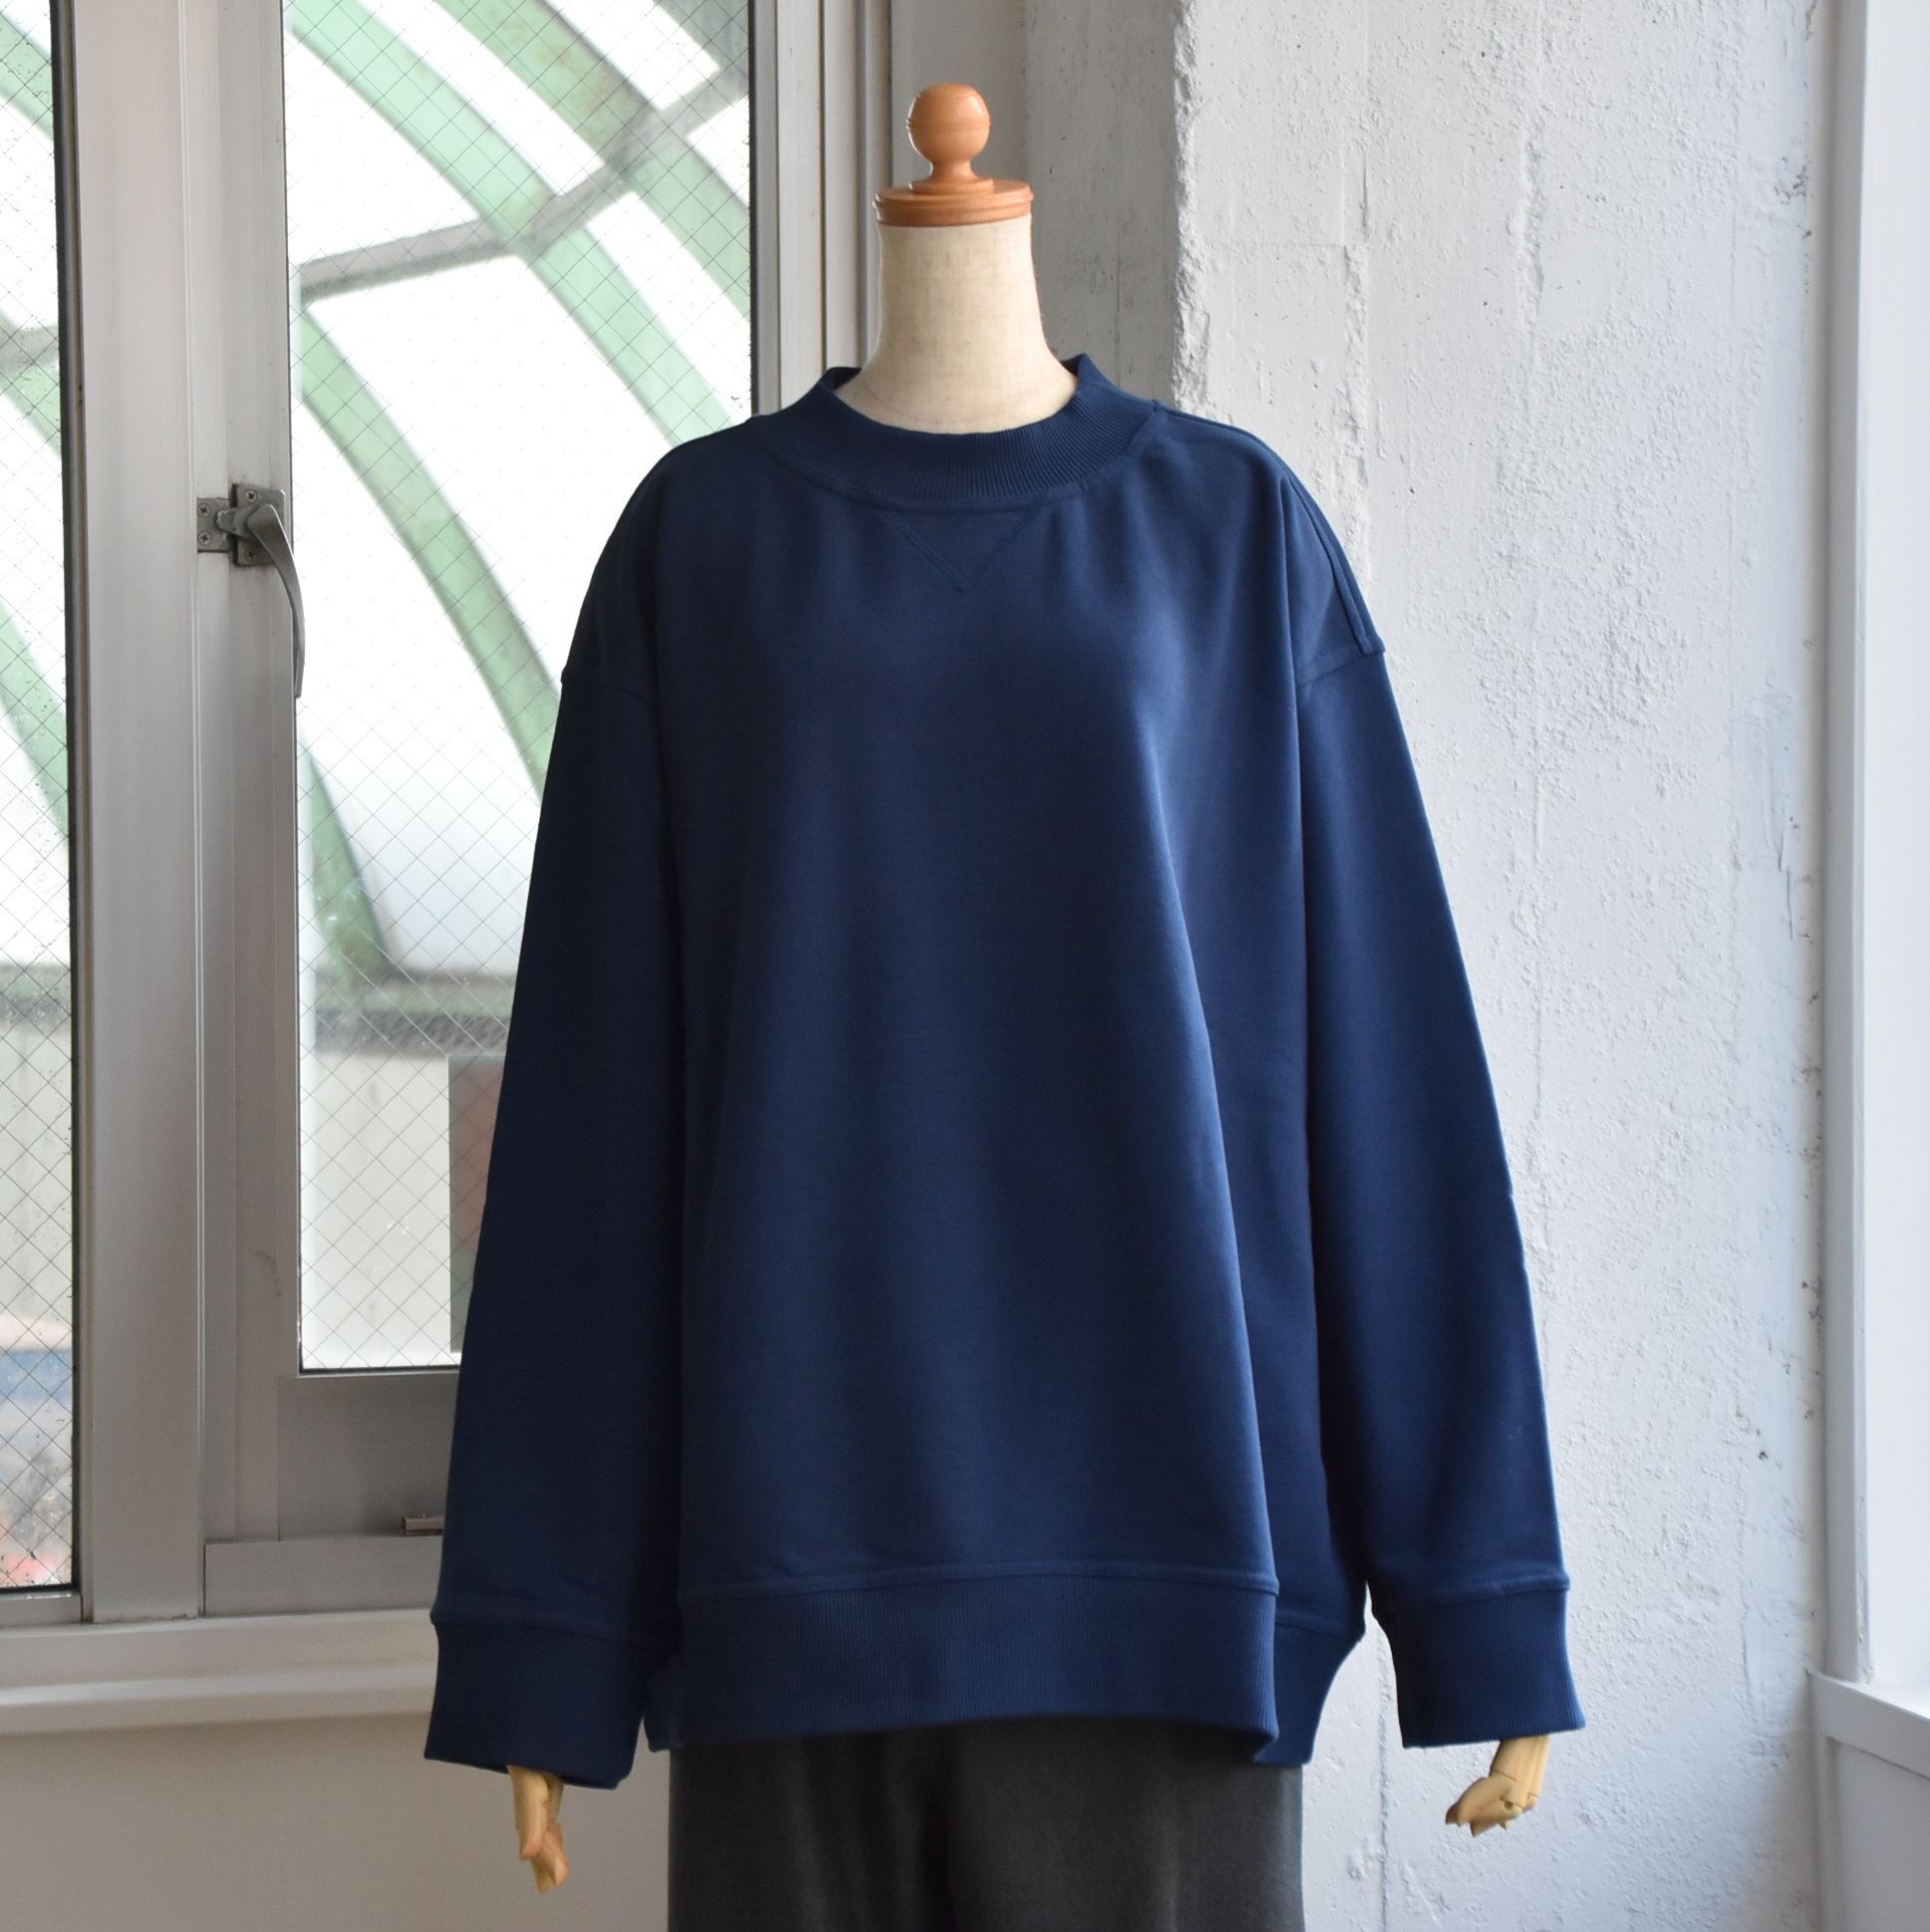 y40% off salezSOFIE D'HOORE(\tB[h[) / Long sleeve C-neck sweatshirt with top stichy2FWJz #TASTE-AA(1)